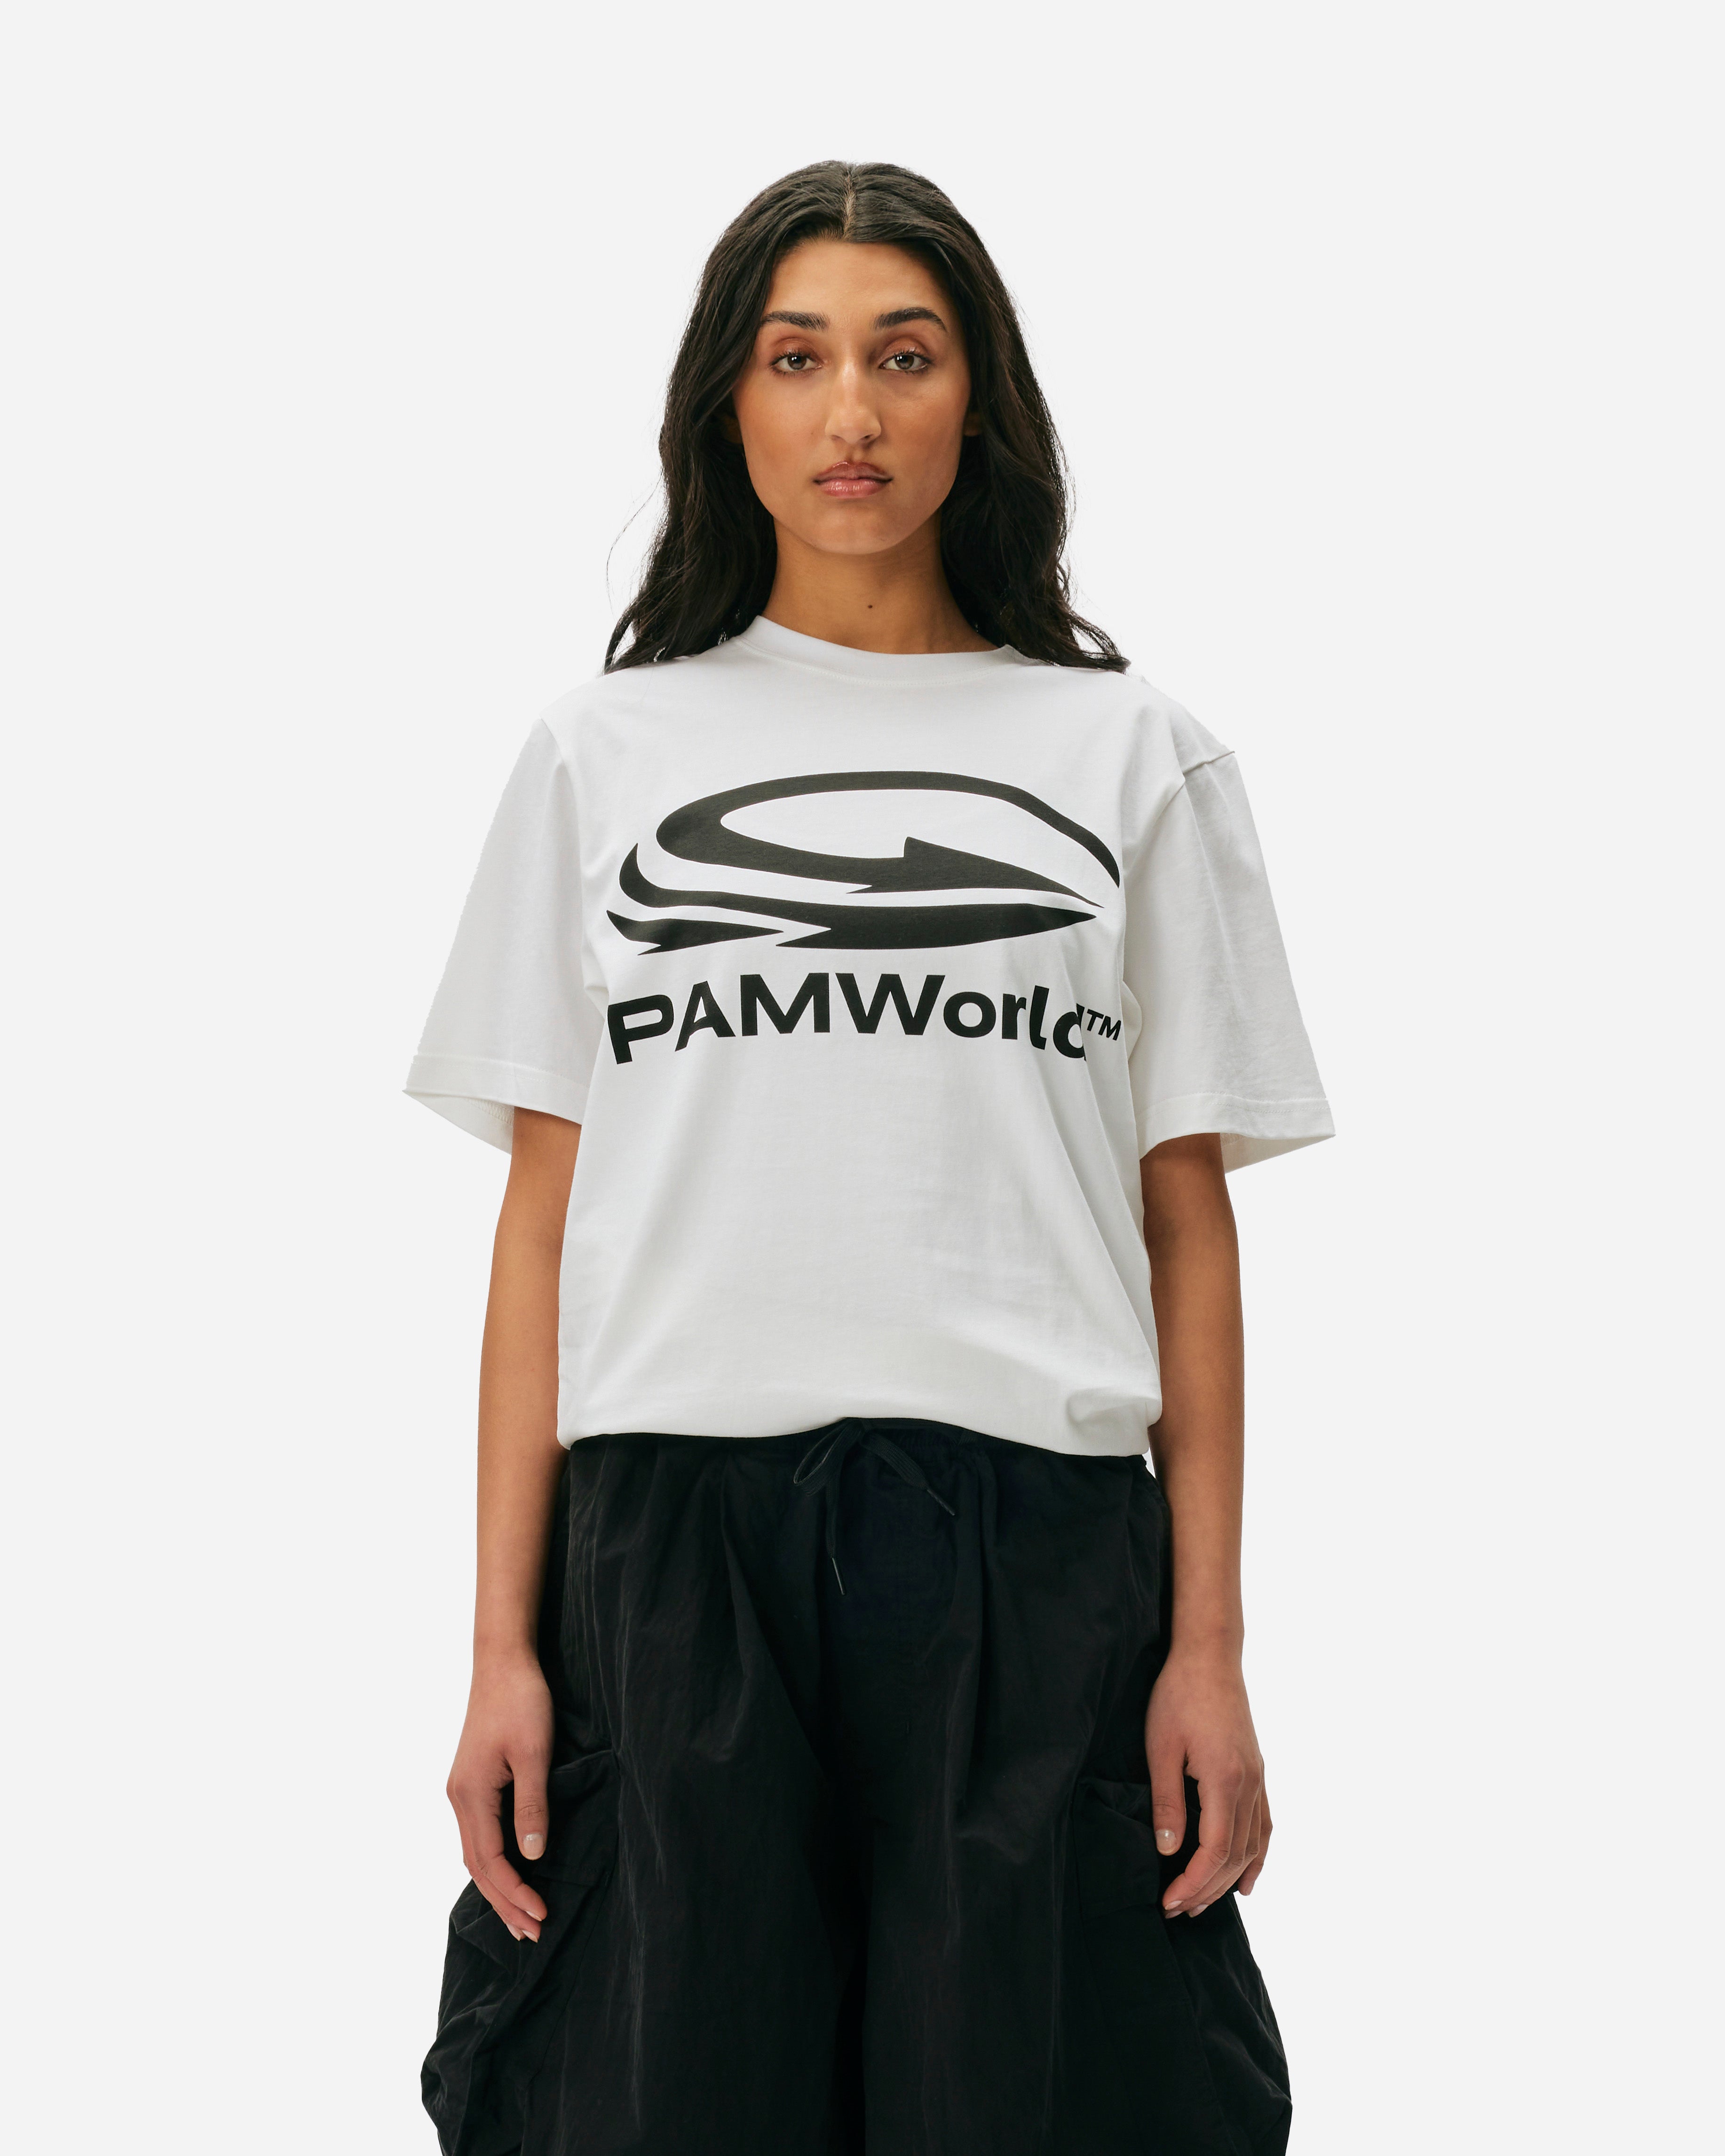 P.A.M P.A.M. World T-shirt WHITE 1531/A-W